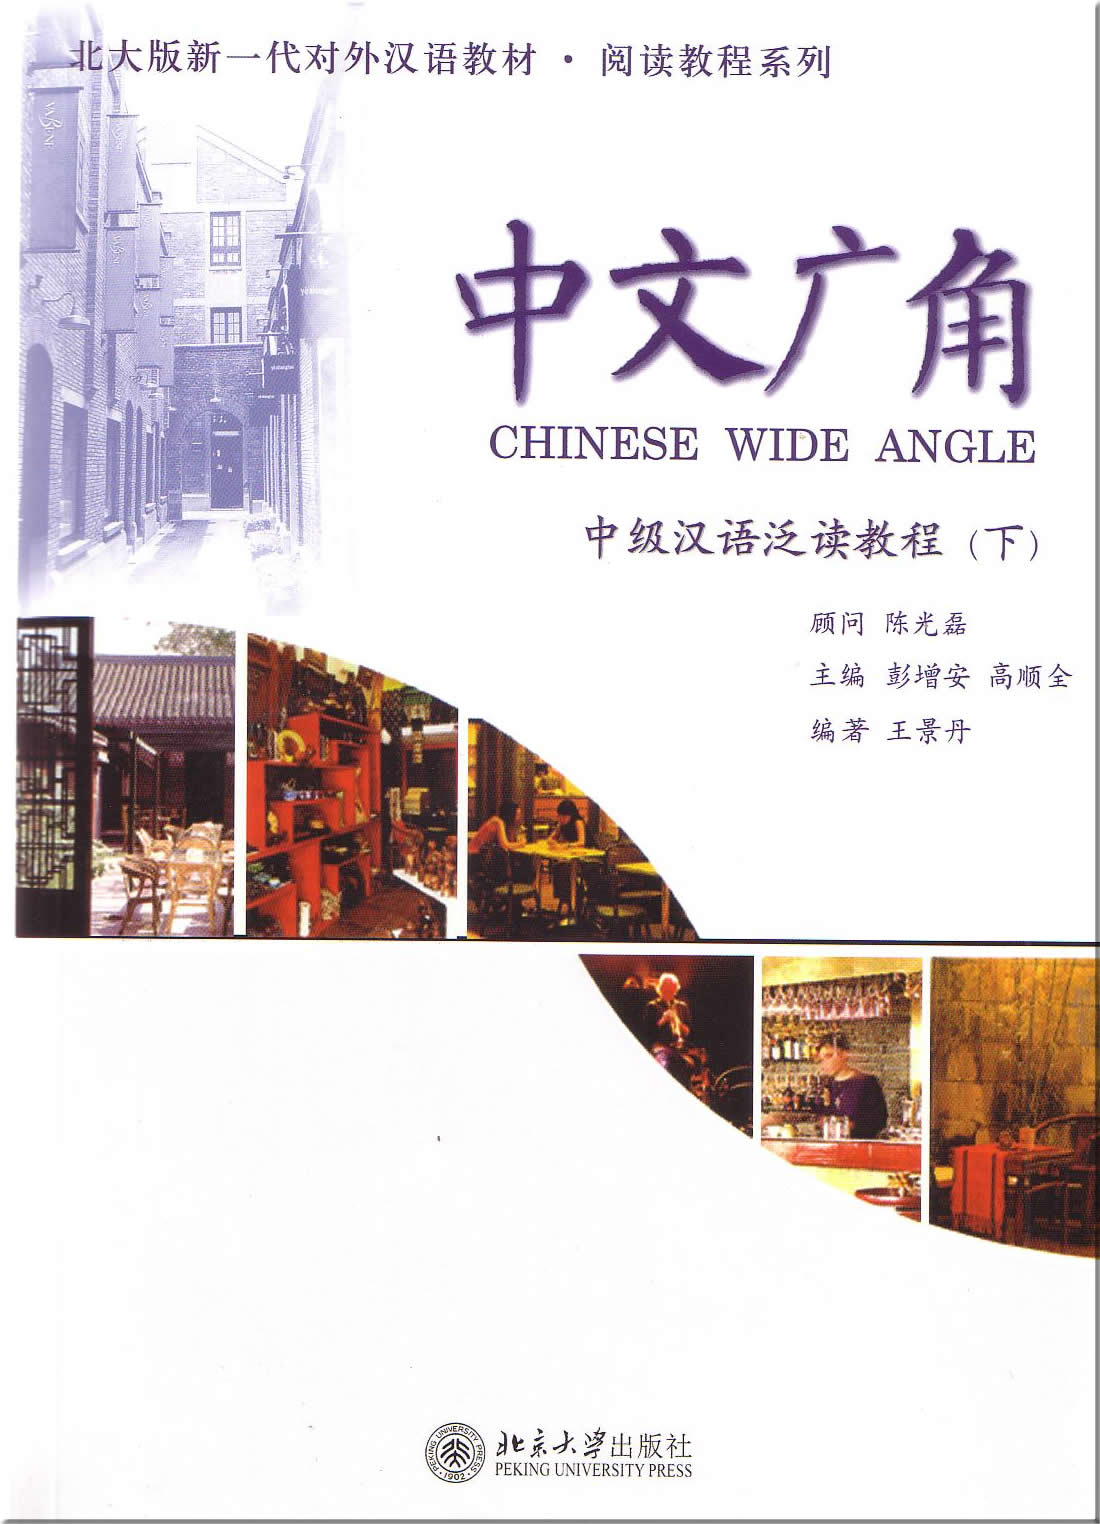 Chinese Wide Angle - Lesen (Mittelstufe II) + 3CDs <br>ISBN:7-301-09778-6, 7301097786, 9787301097786